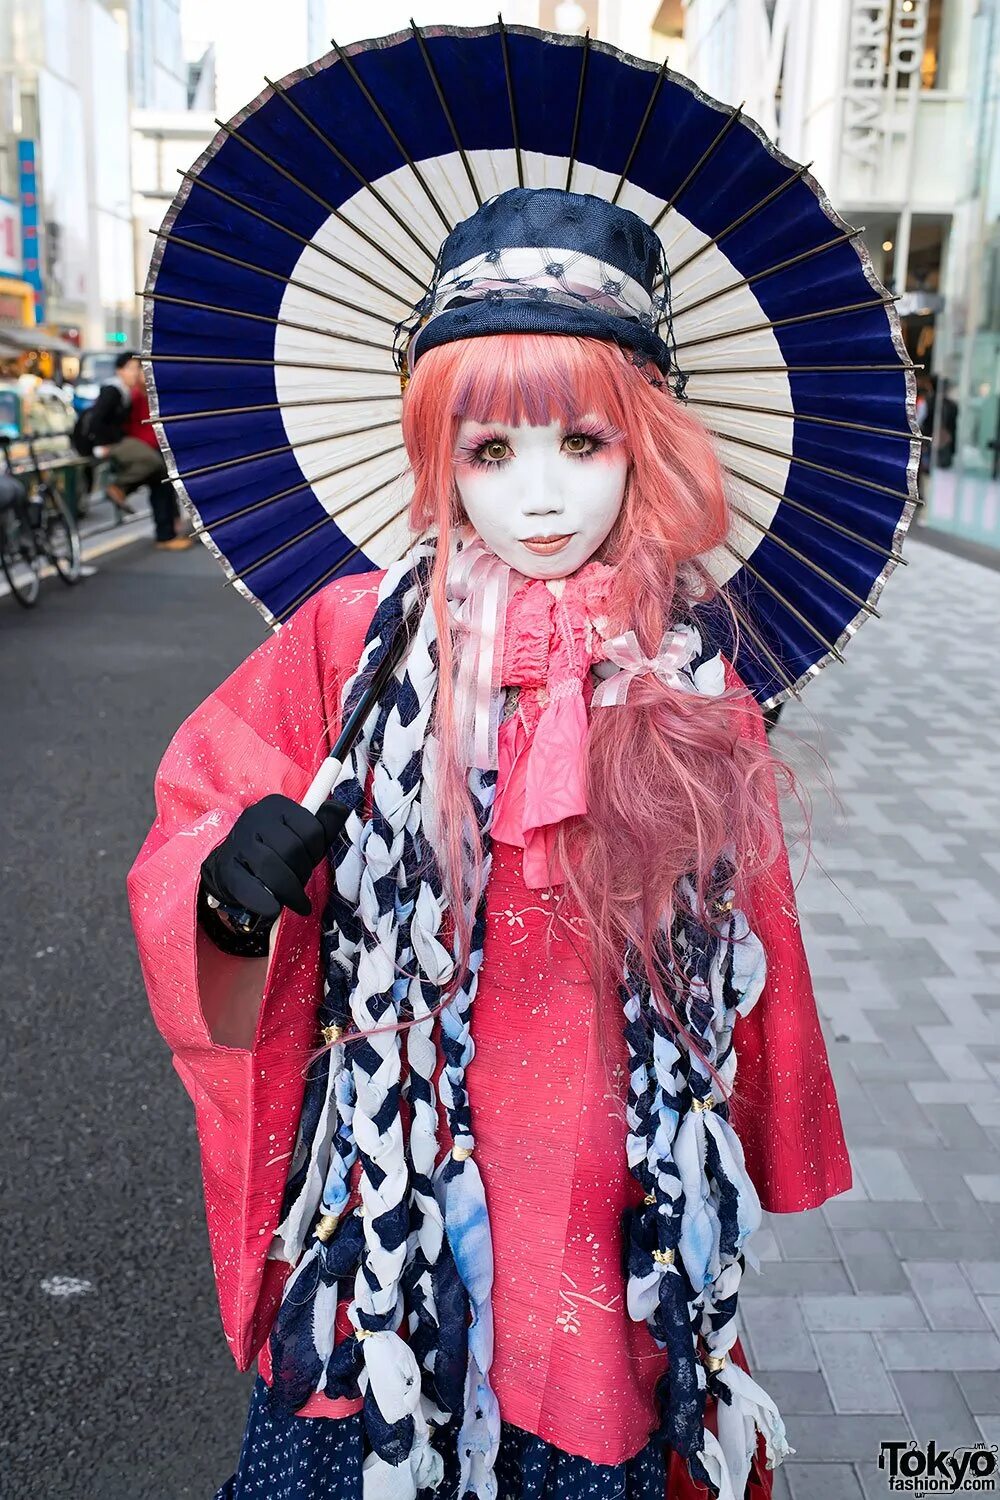 Мода Японии Харадзюку. Харадзюку Токио. Безумная японская мода Харадзюку. Японские субкультуры Харадзюку.